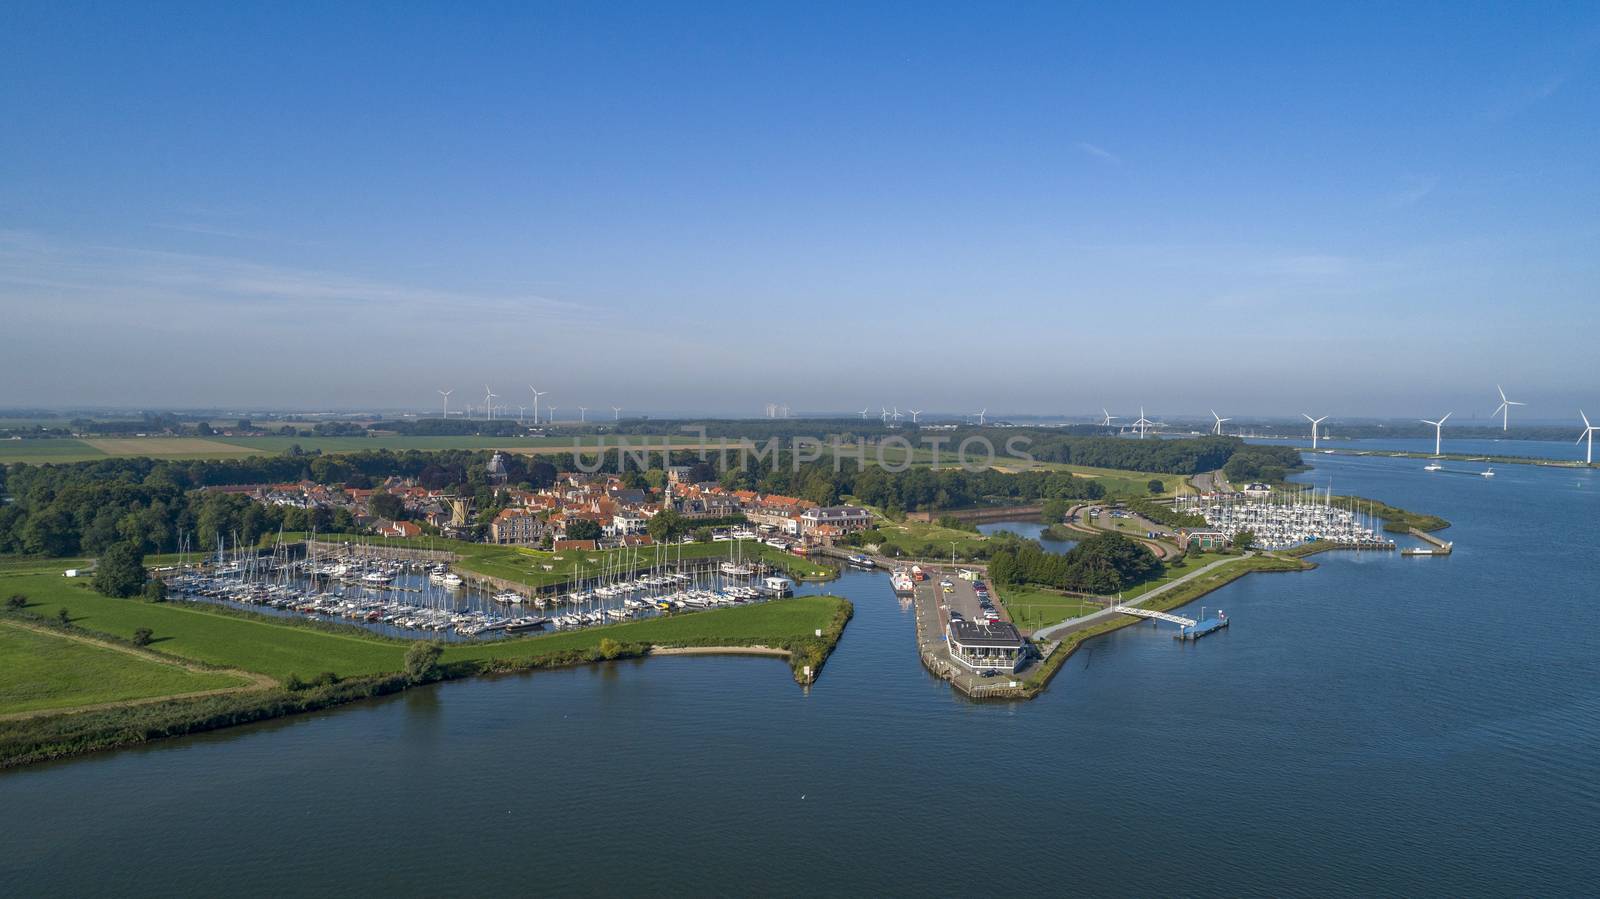 Aerial view of the fortified city of Willemstad, Moerdijk in the by Tjeerdkruse